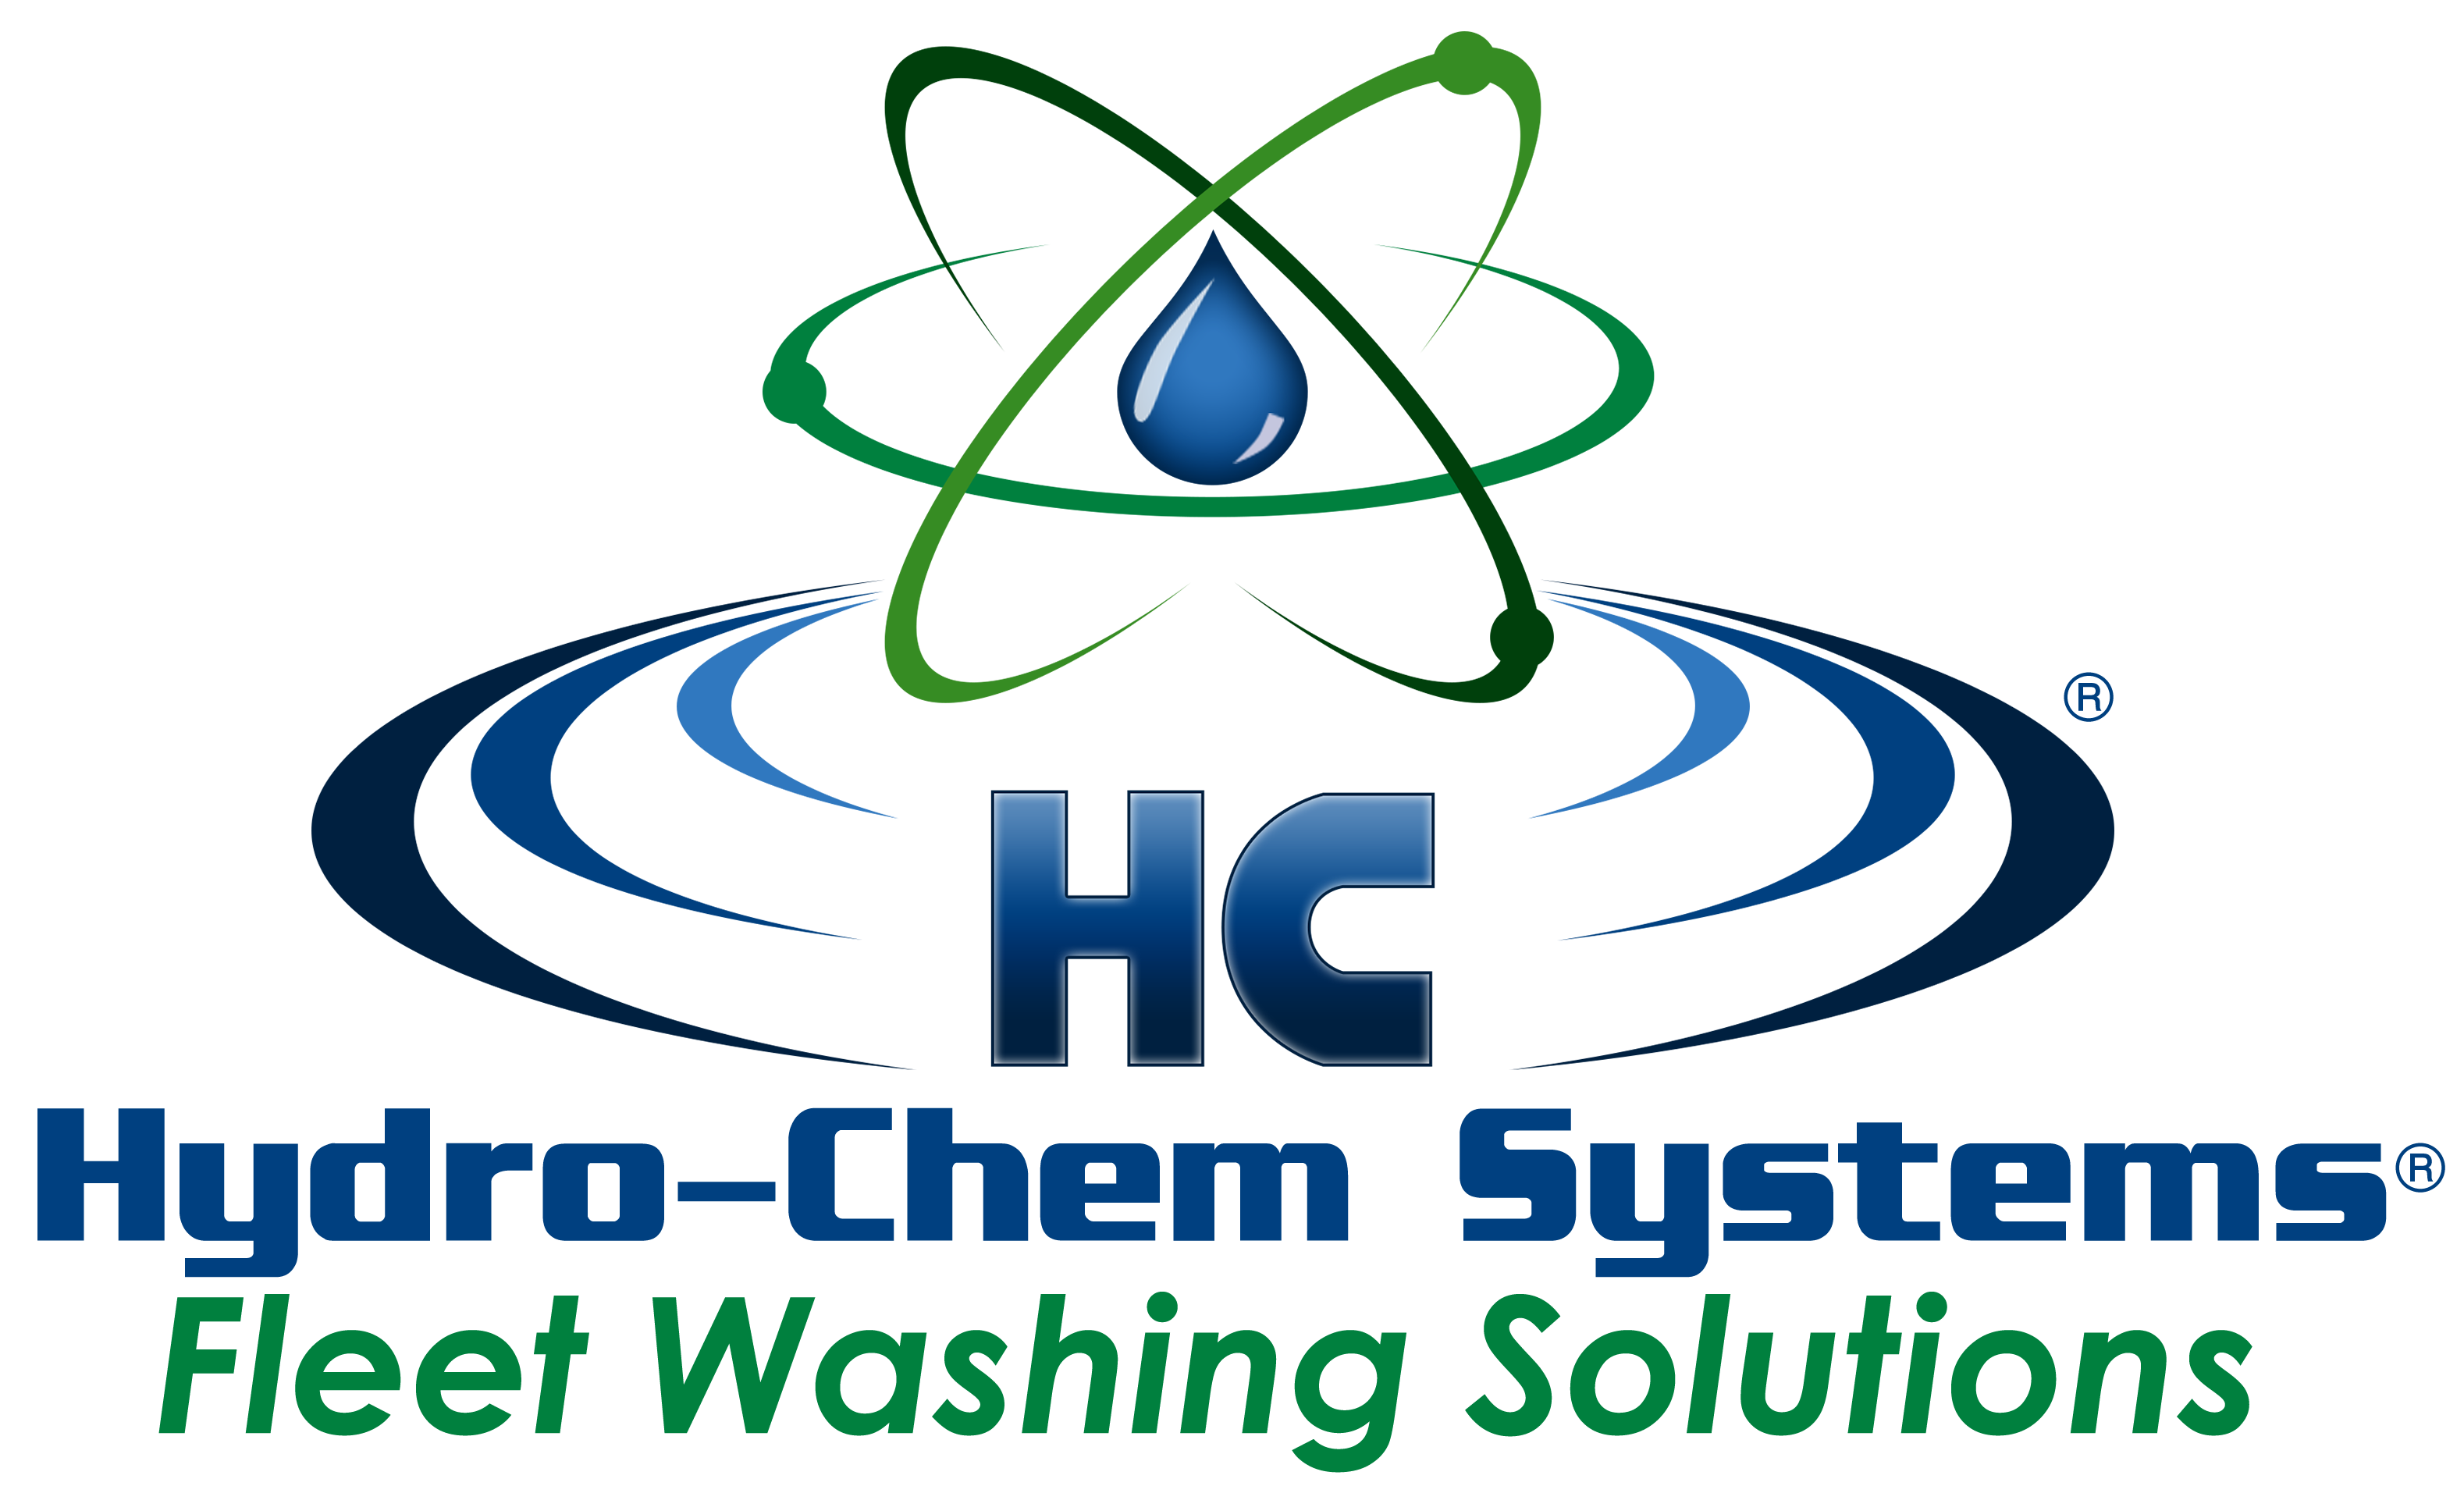 Hydro-Chem Systems Fleet Washing Solutions